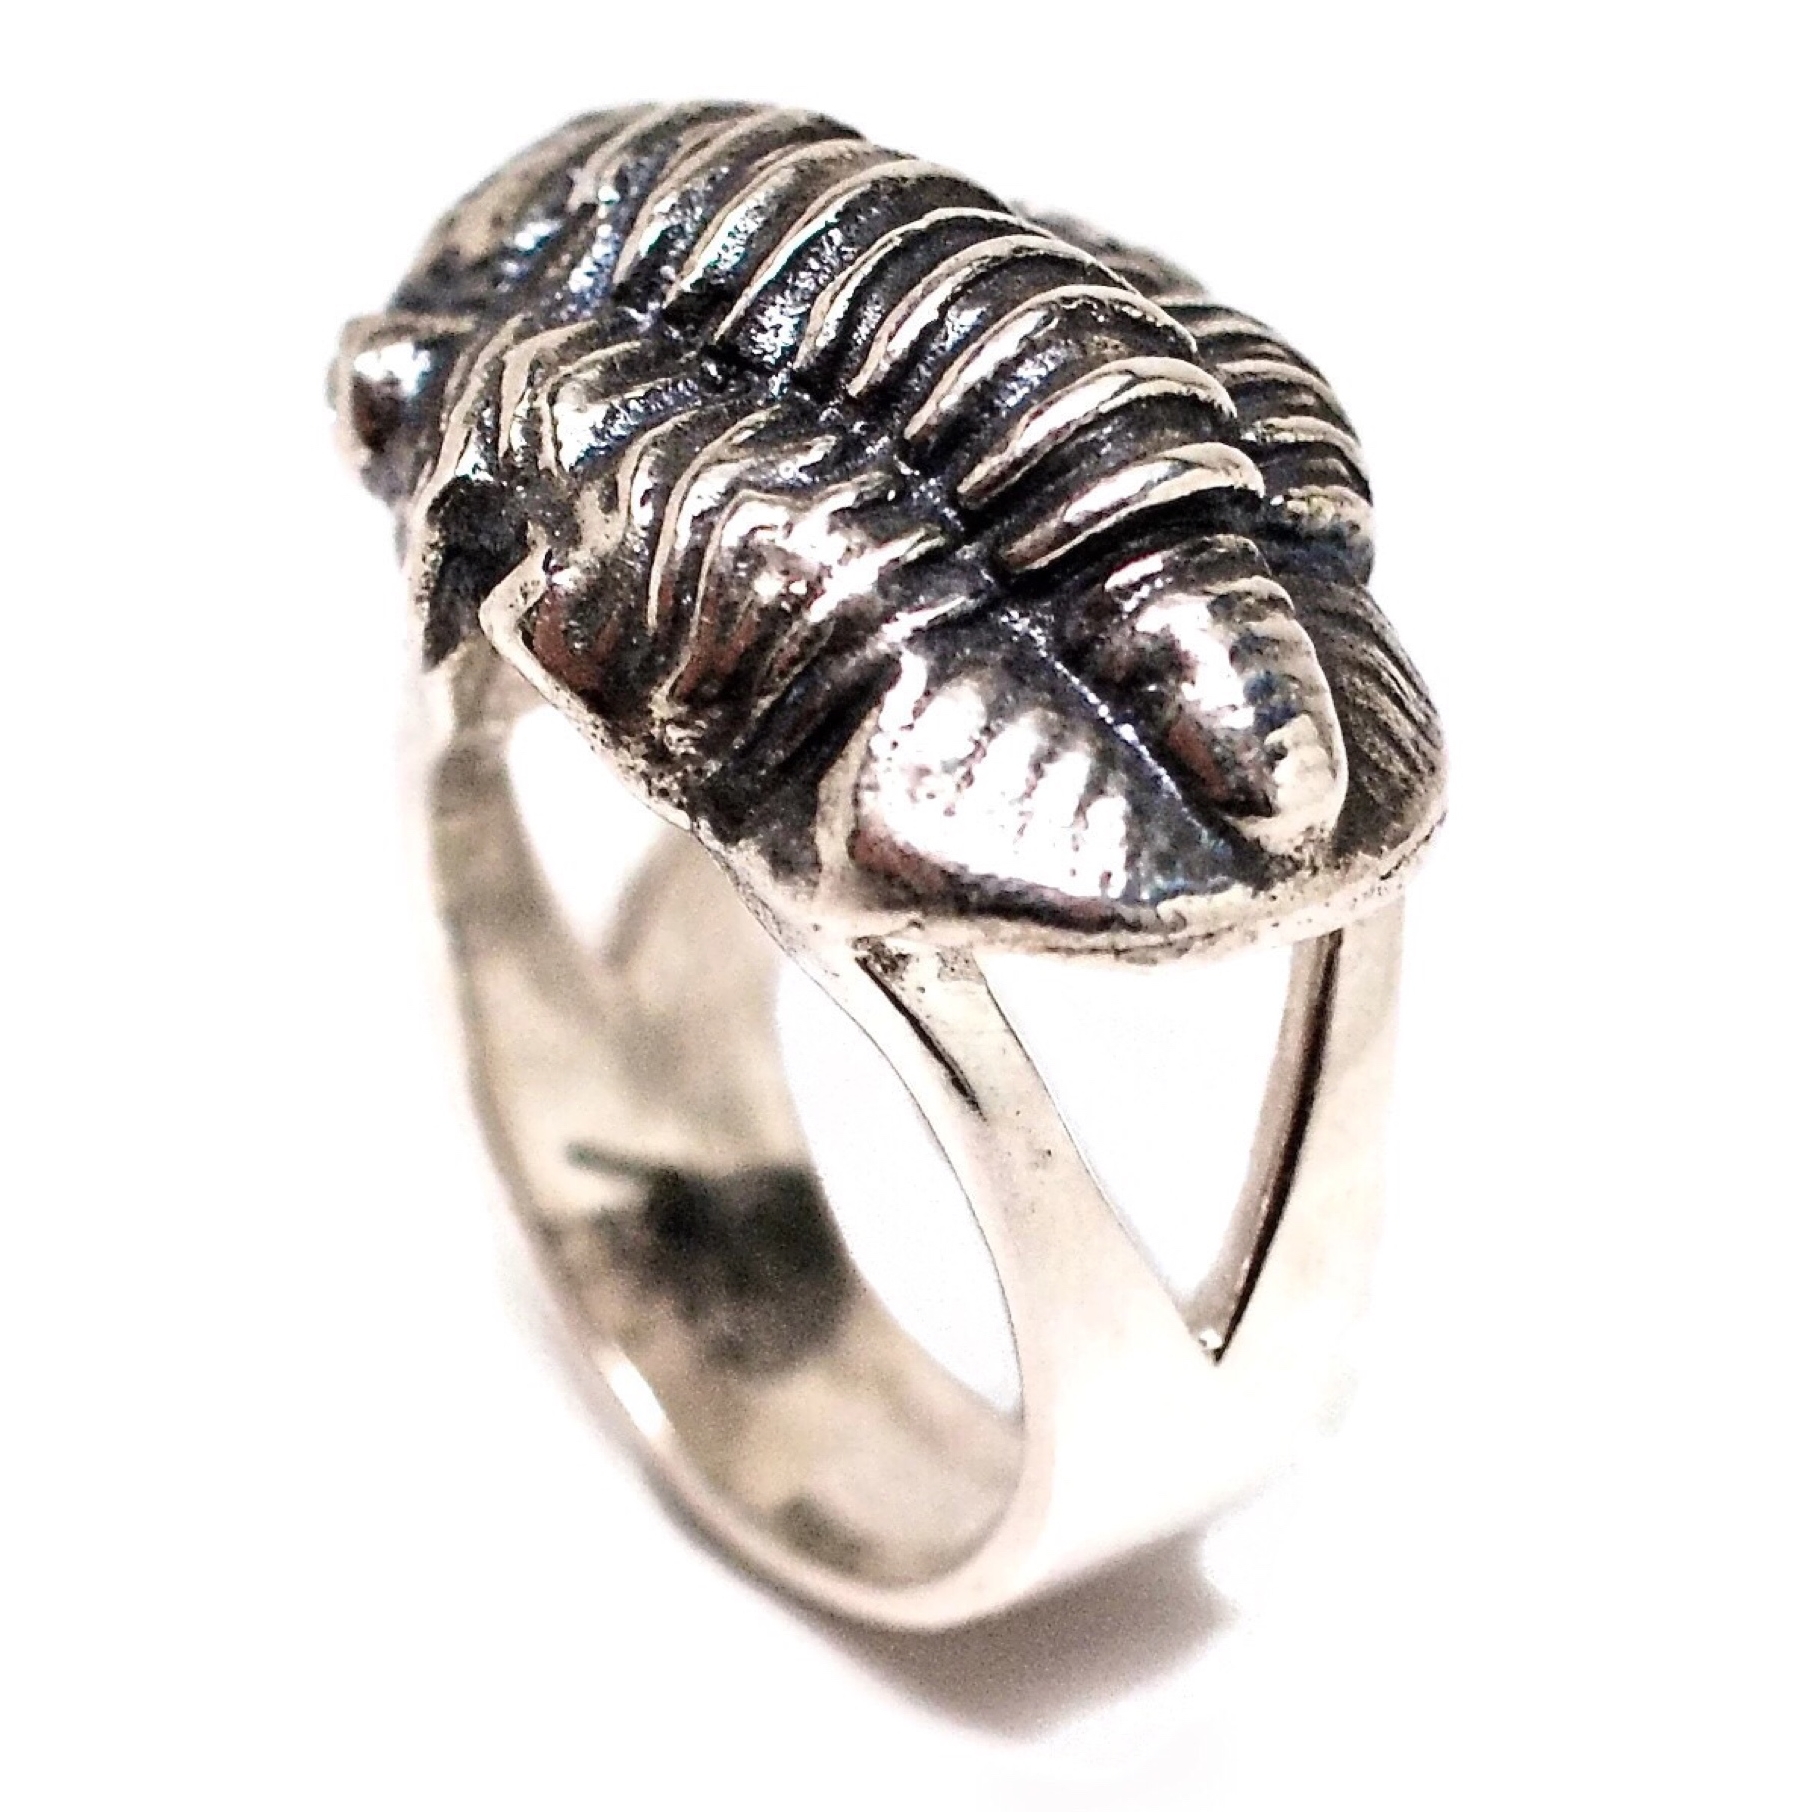 Utah Trilobite 925 Sterling Silver Adjustable Ring 1" Stunning Full Face 